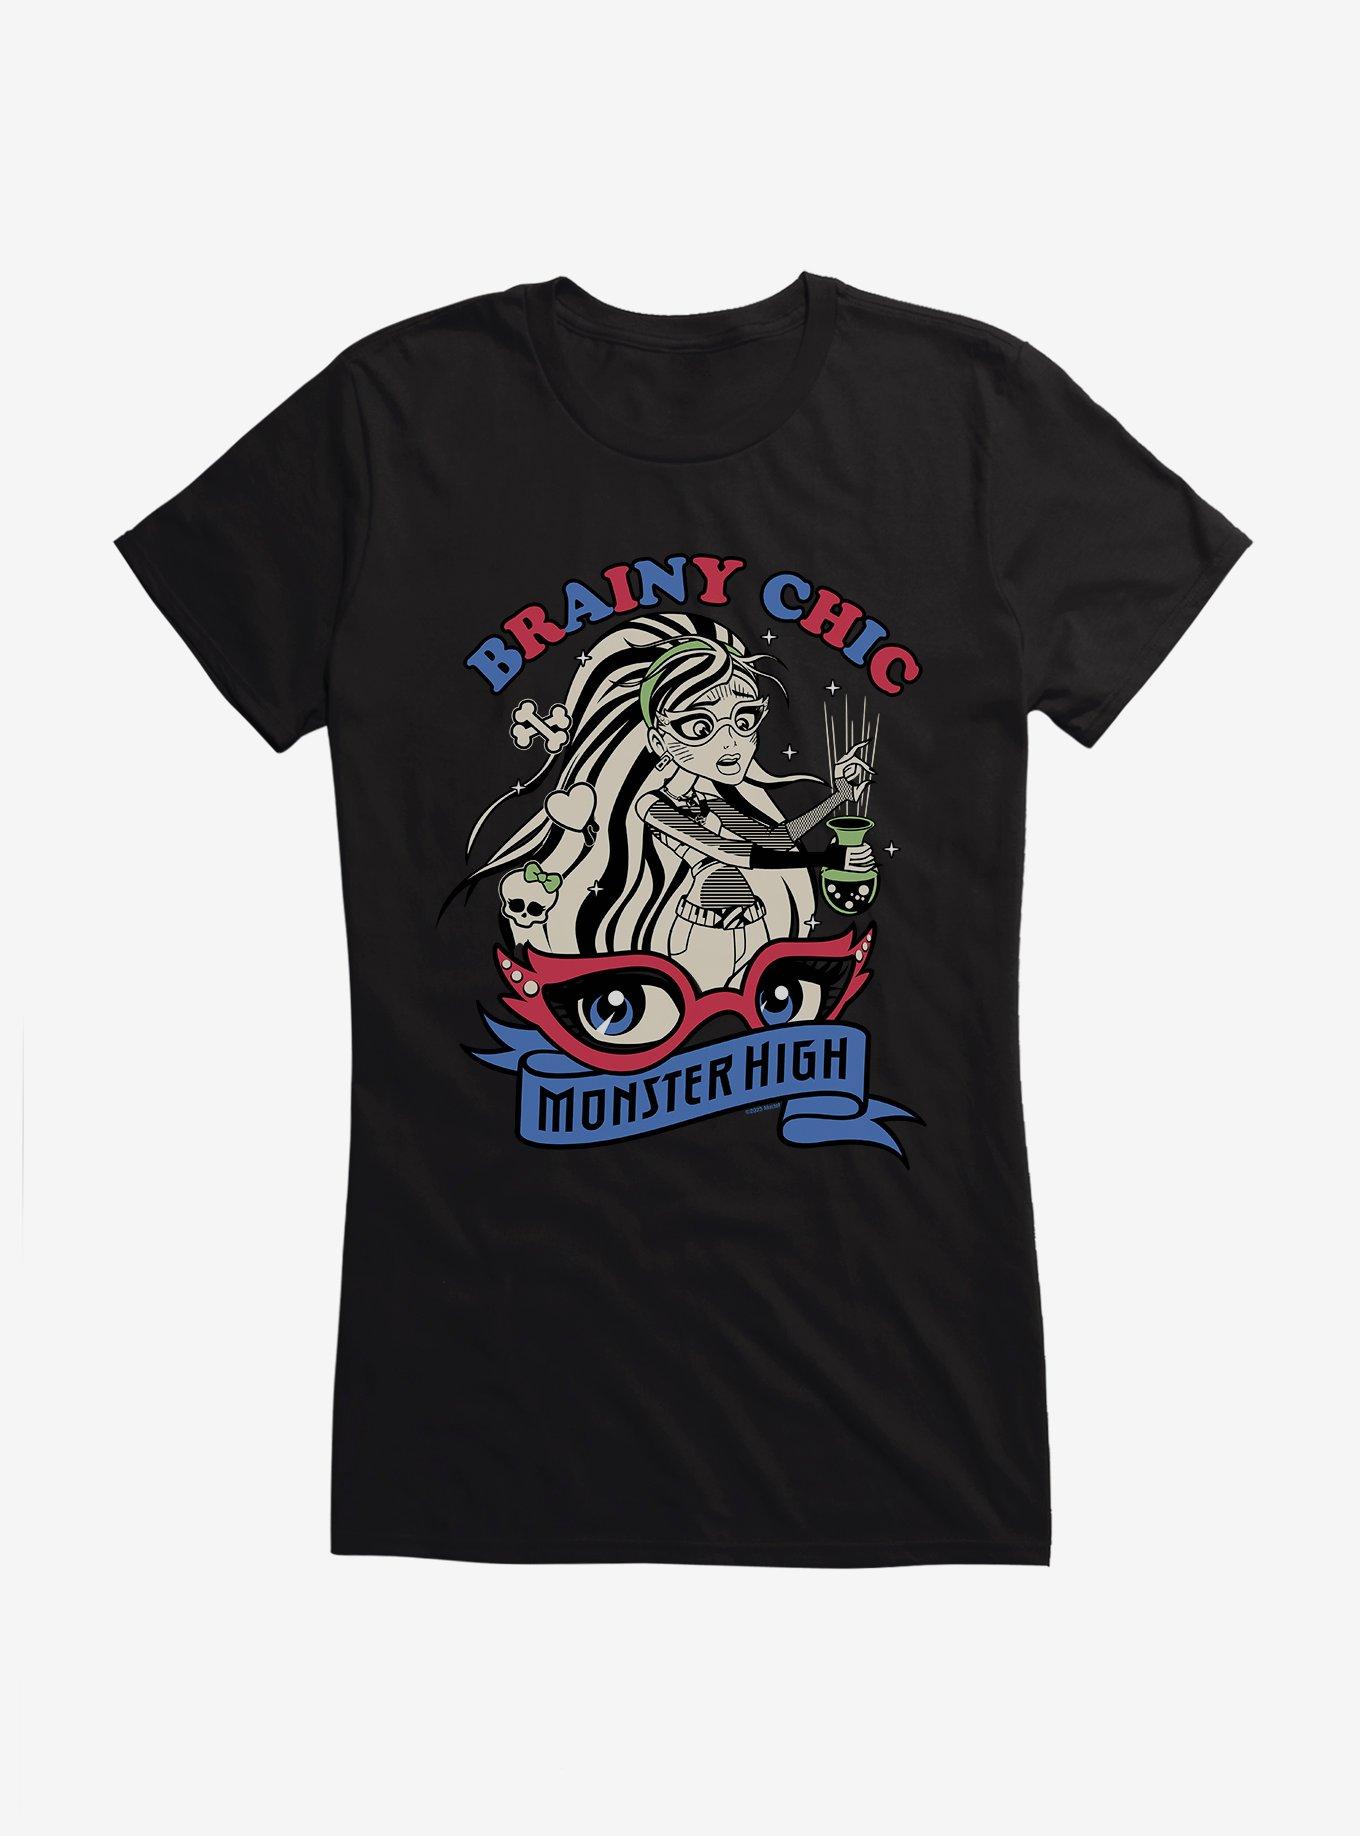 Monster High Ghoulia Yelps Brainy Chic Girls T-Shirt